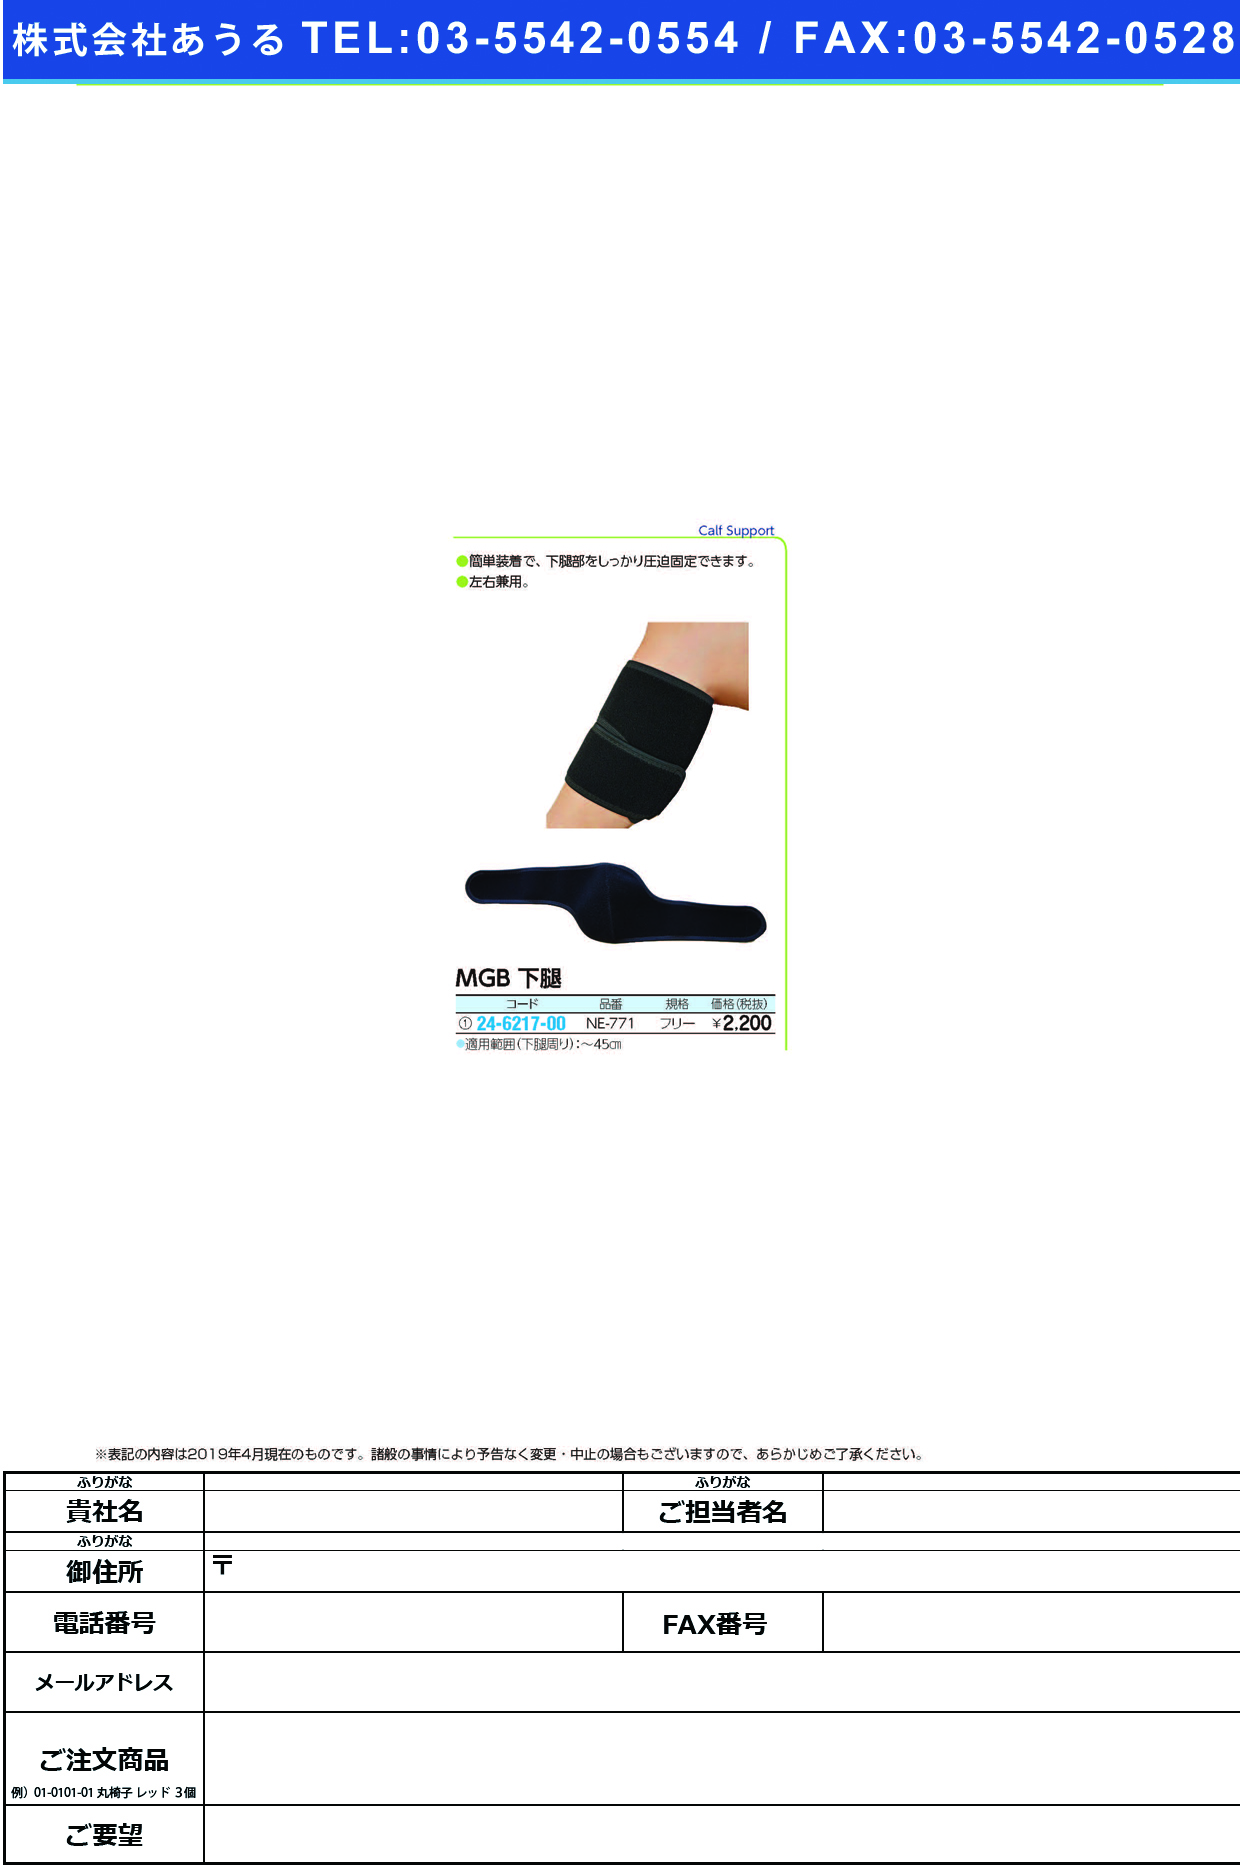 (24-6217-00)ＭＧＢ下腿 NE-771 MGBｶﾀｲ(日本衛材)【1個単位】【2019年カタログ商品】